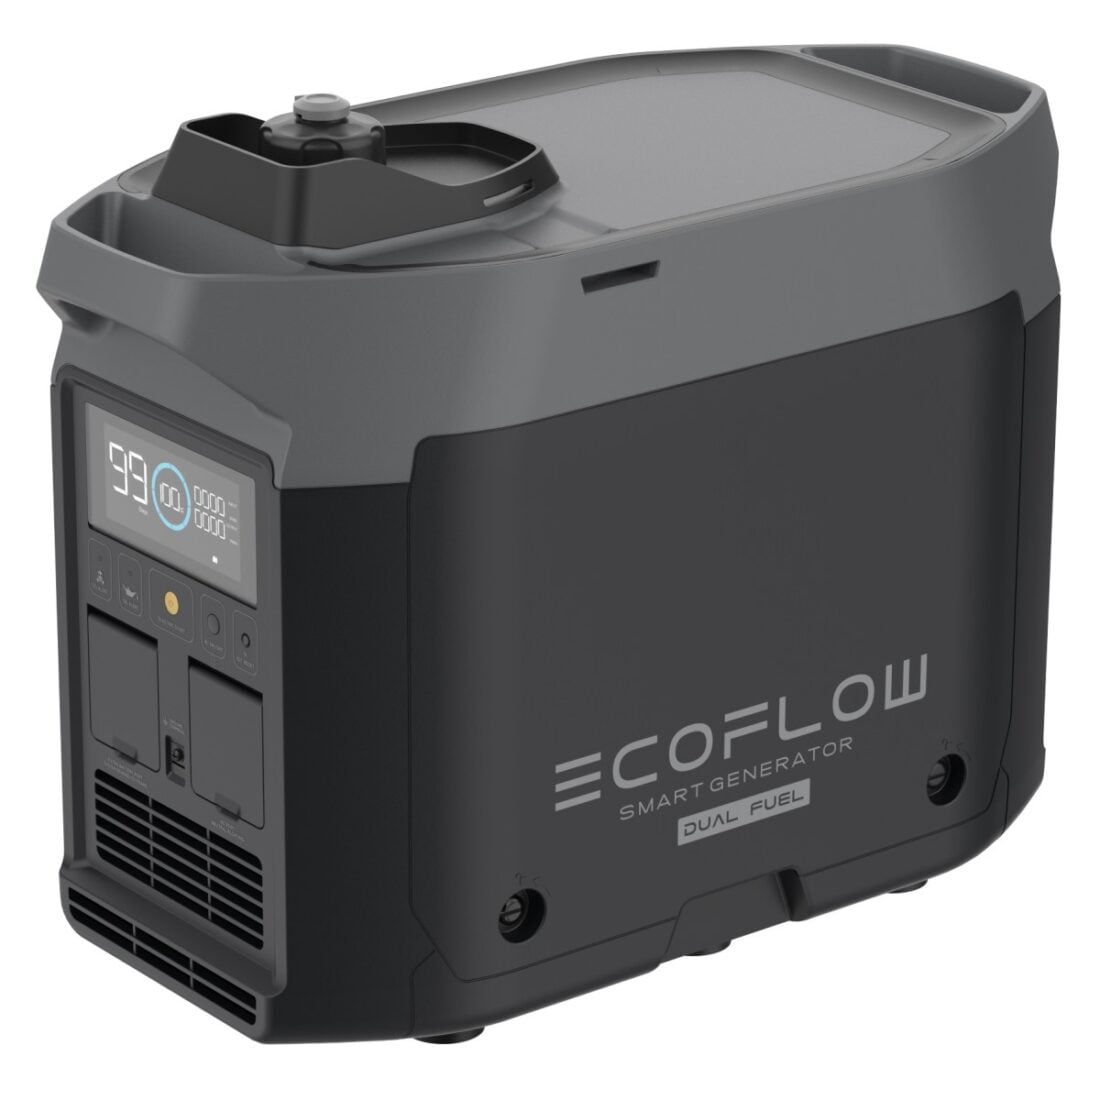 EcoFlow Dual Fuel Smart Generator (UK)